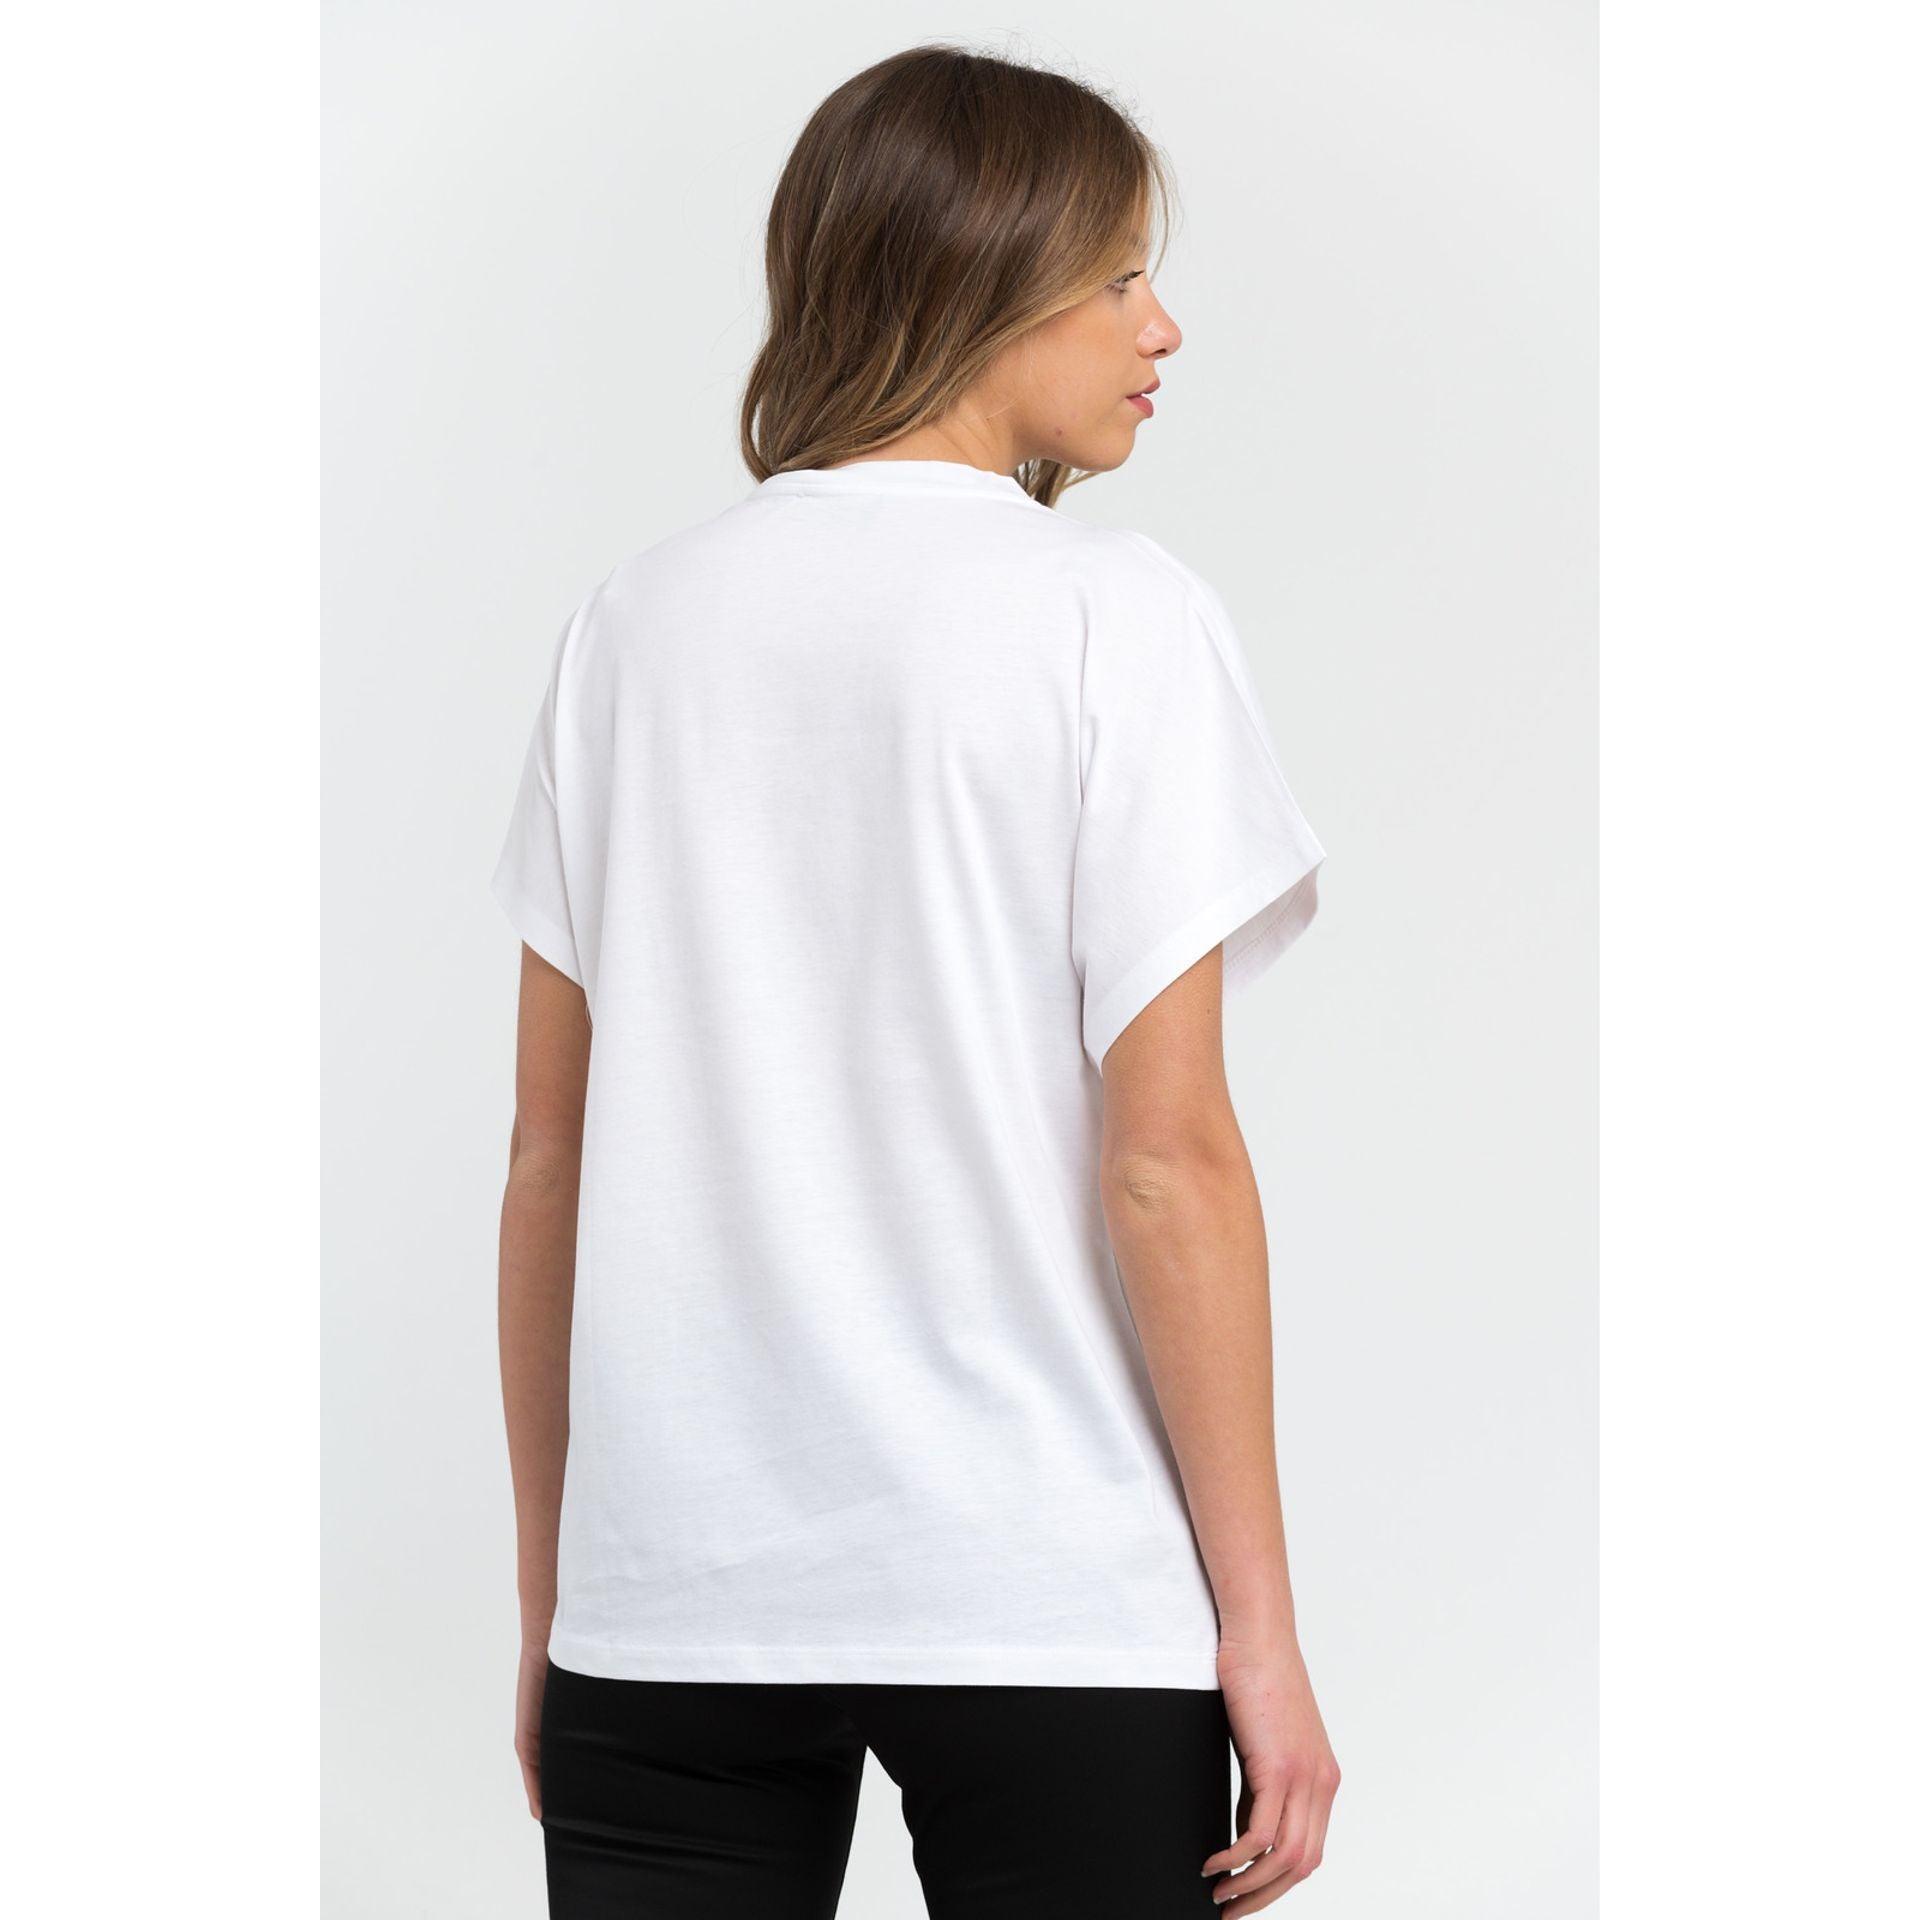 Trussardi Women T-Shirts - White Brand T-shirts - T-Shirt - Guocali